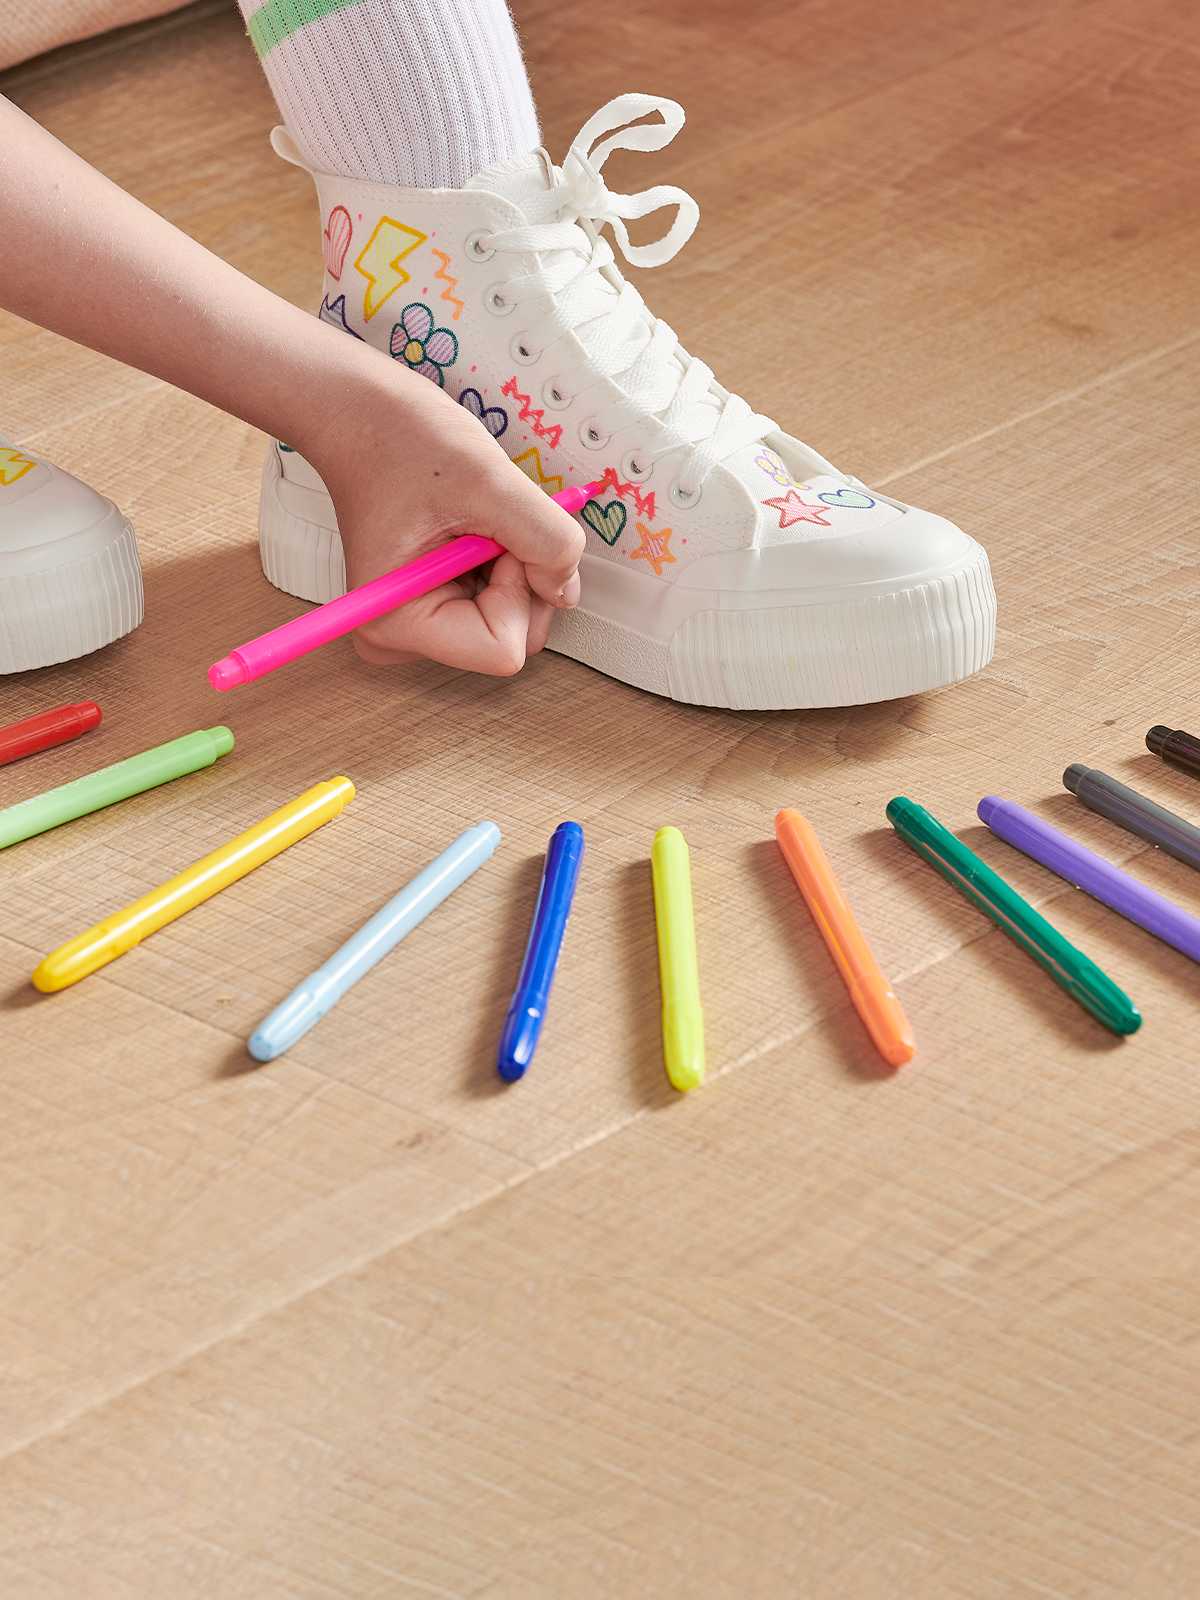 Ooly Chalk-O-Rama Dustless Chalk Crayons - Set of 12 – The Little Kiwi Co